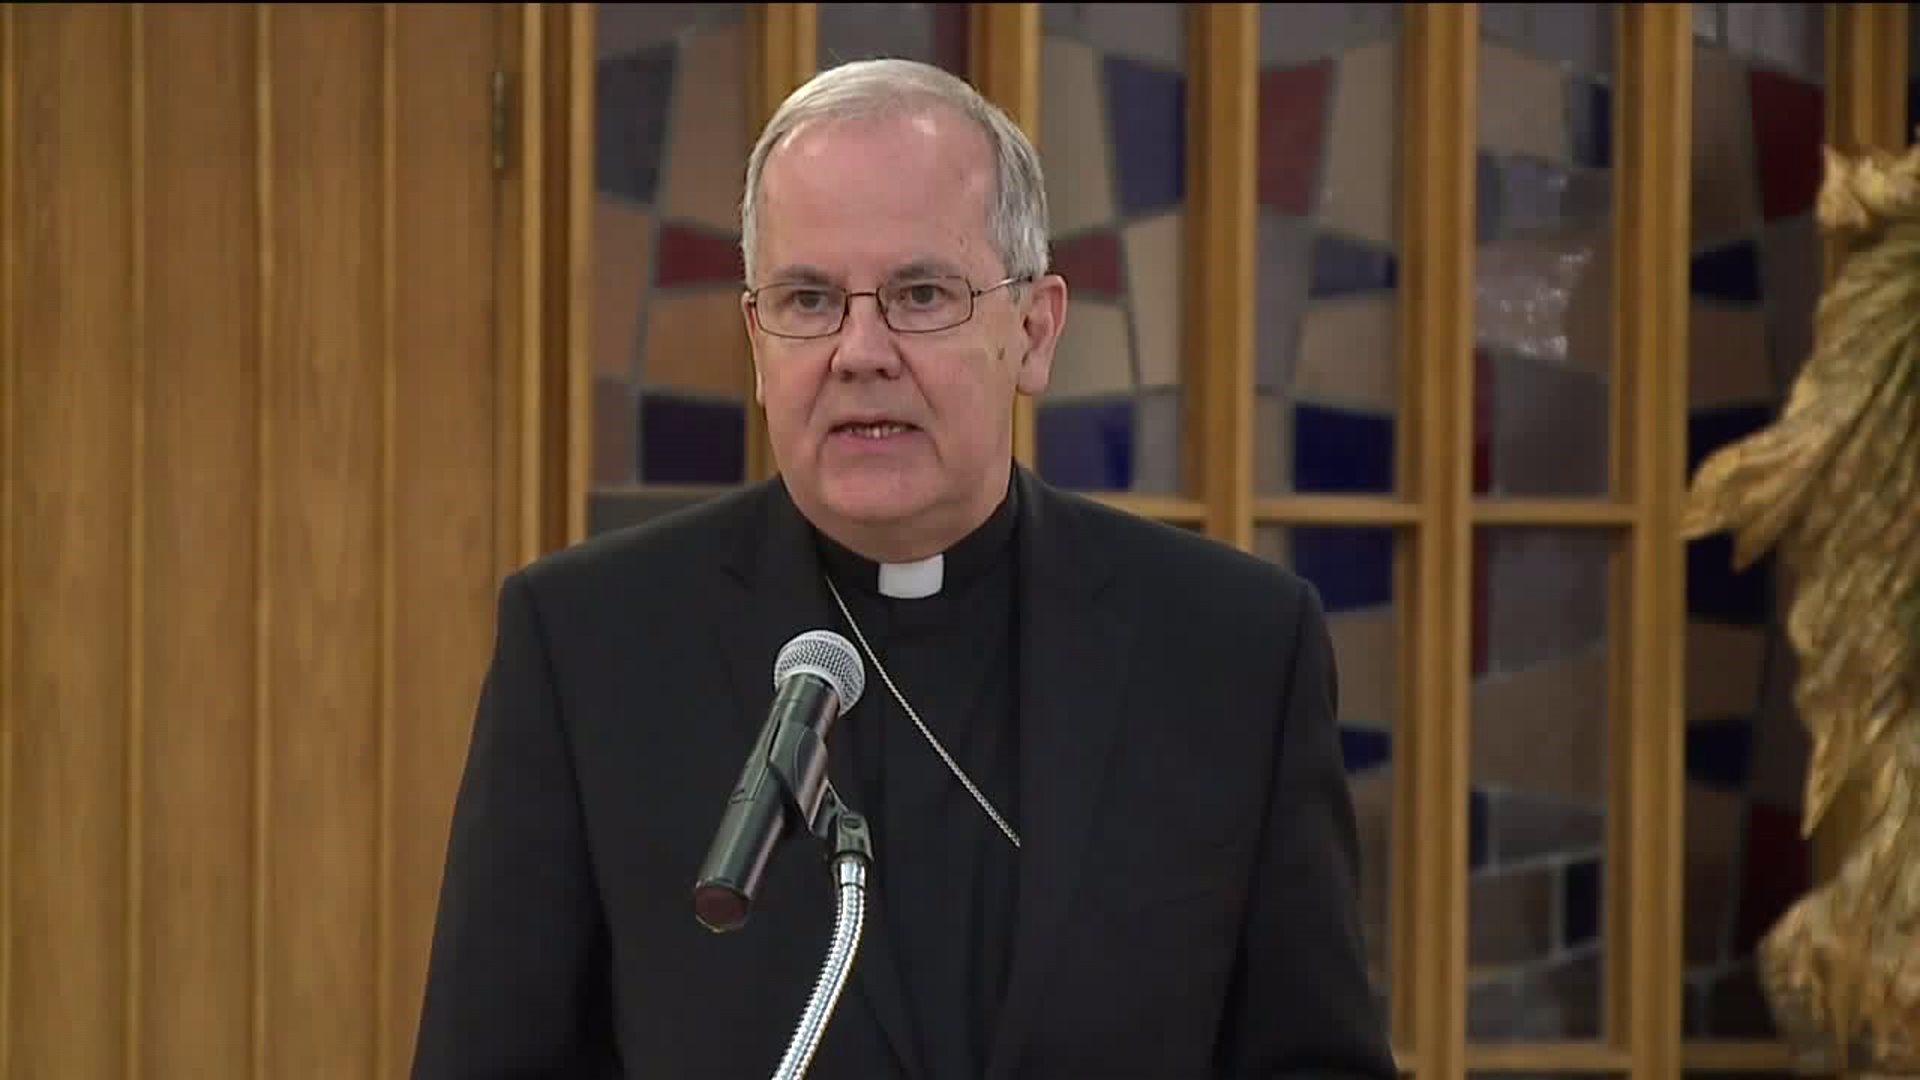 Bishop of Scranton Responds to Grand Jury Report